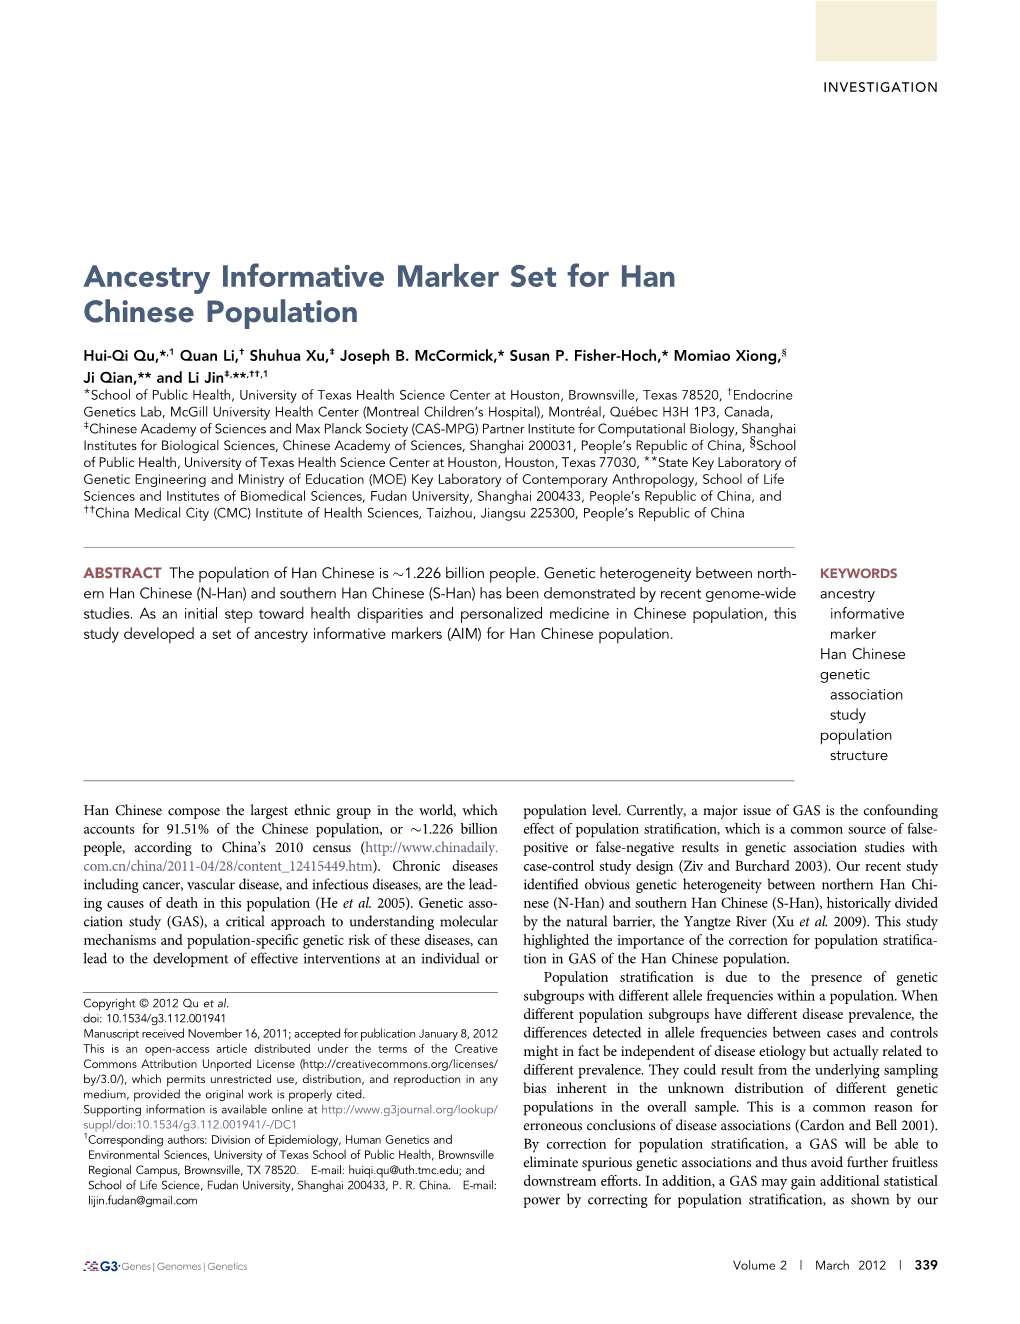 Ancestry Informative Marker Set for Han Chinese Population